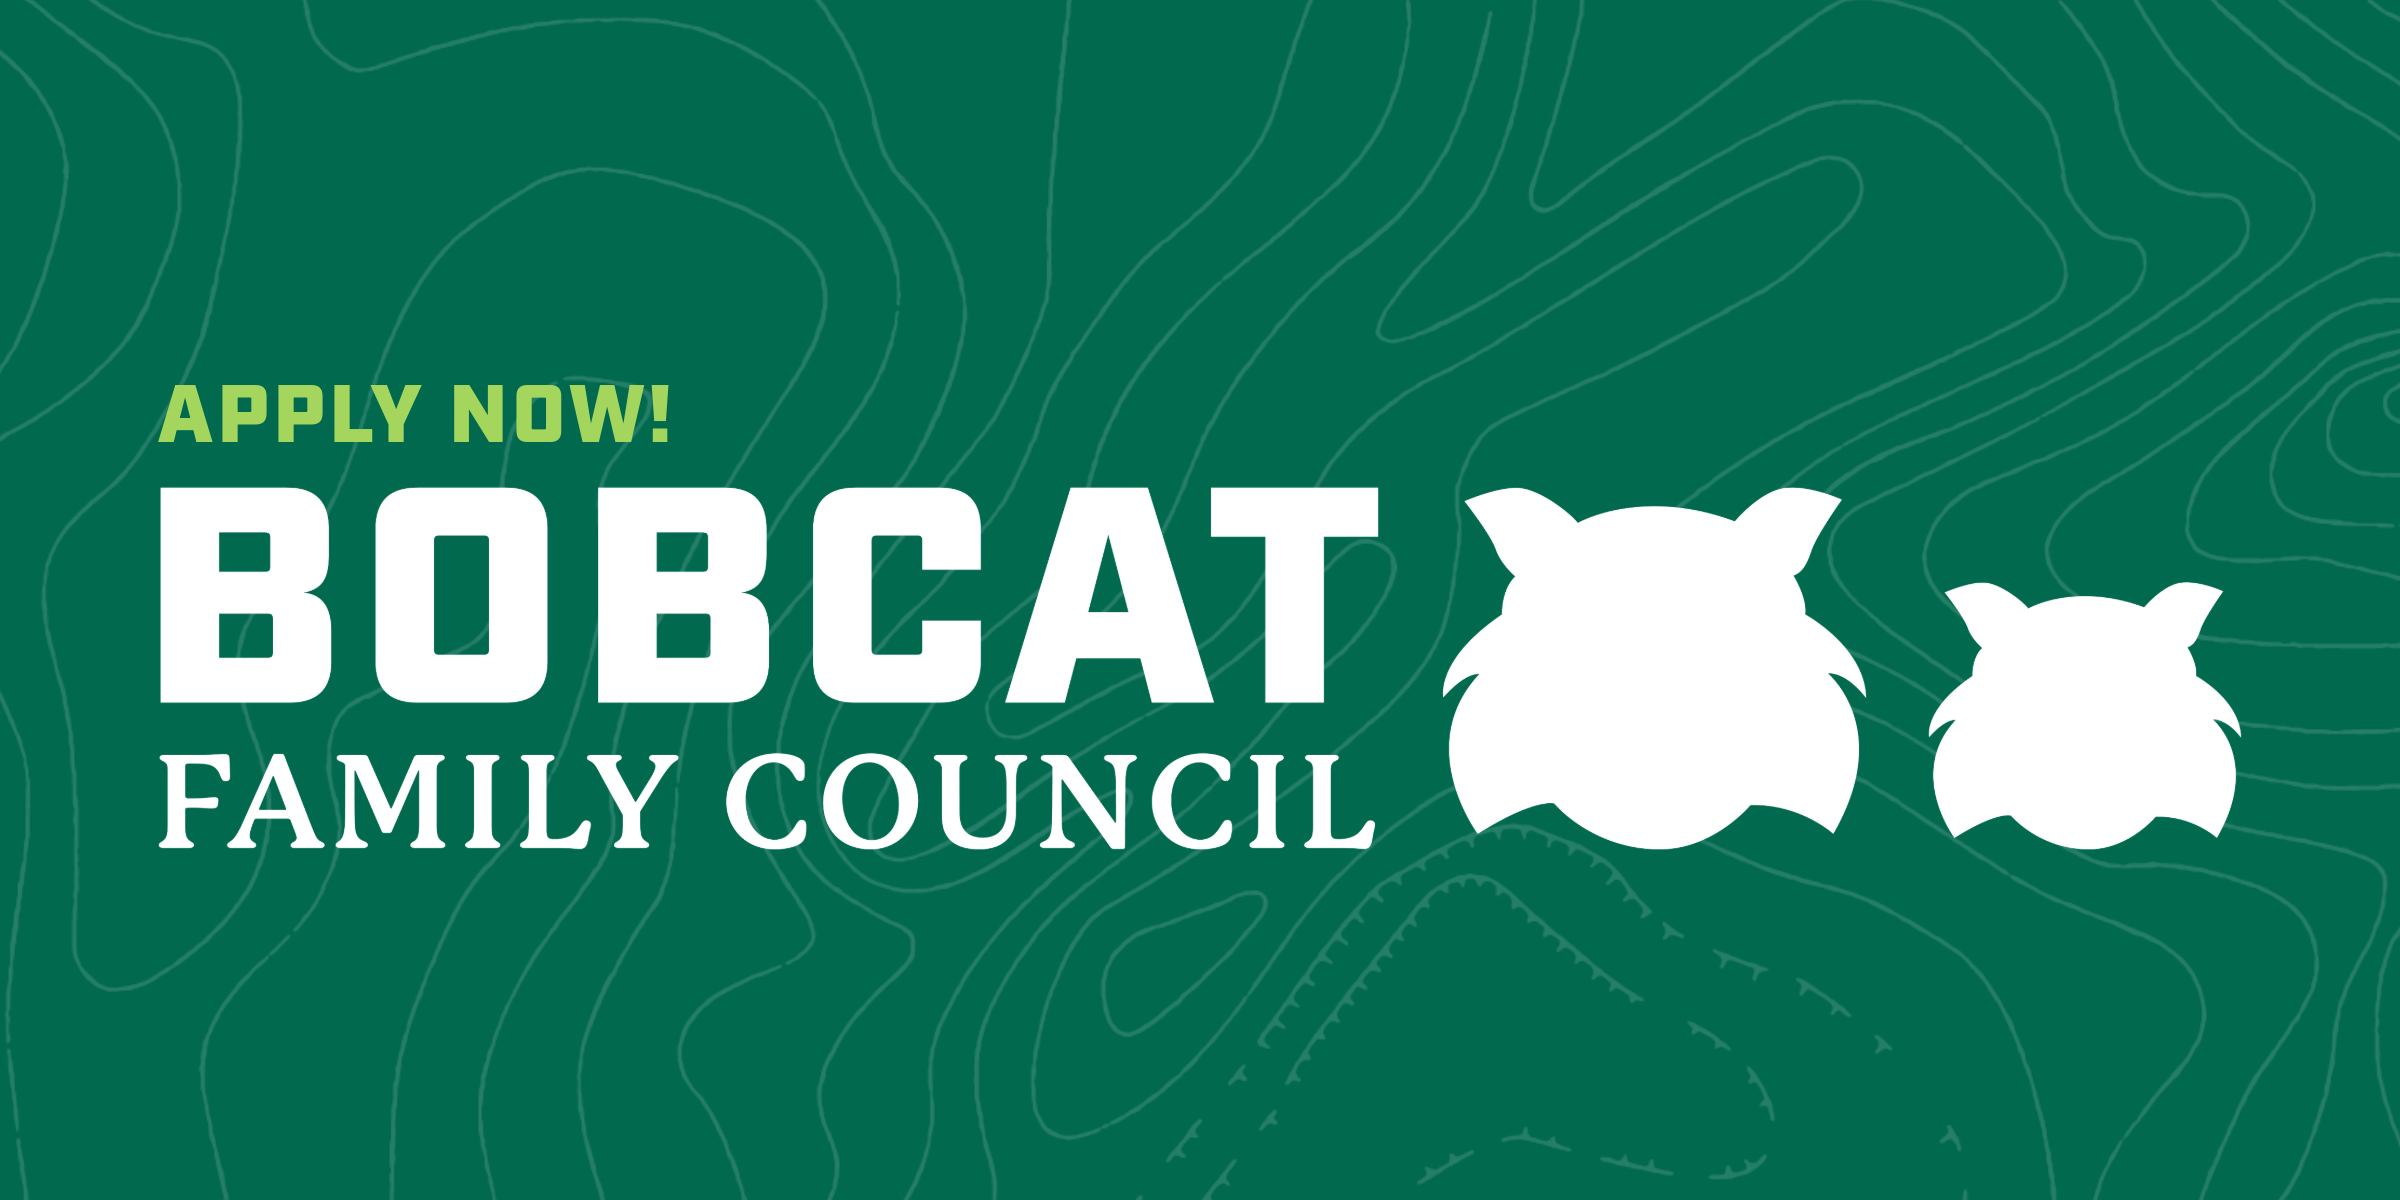 Apply Now! Bobcat Family Council